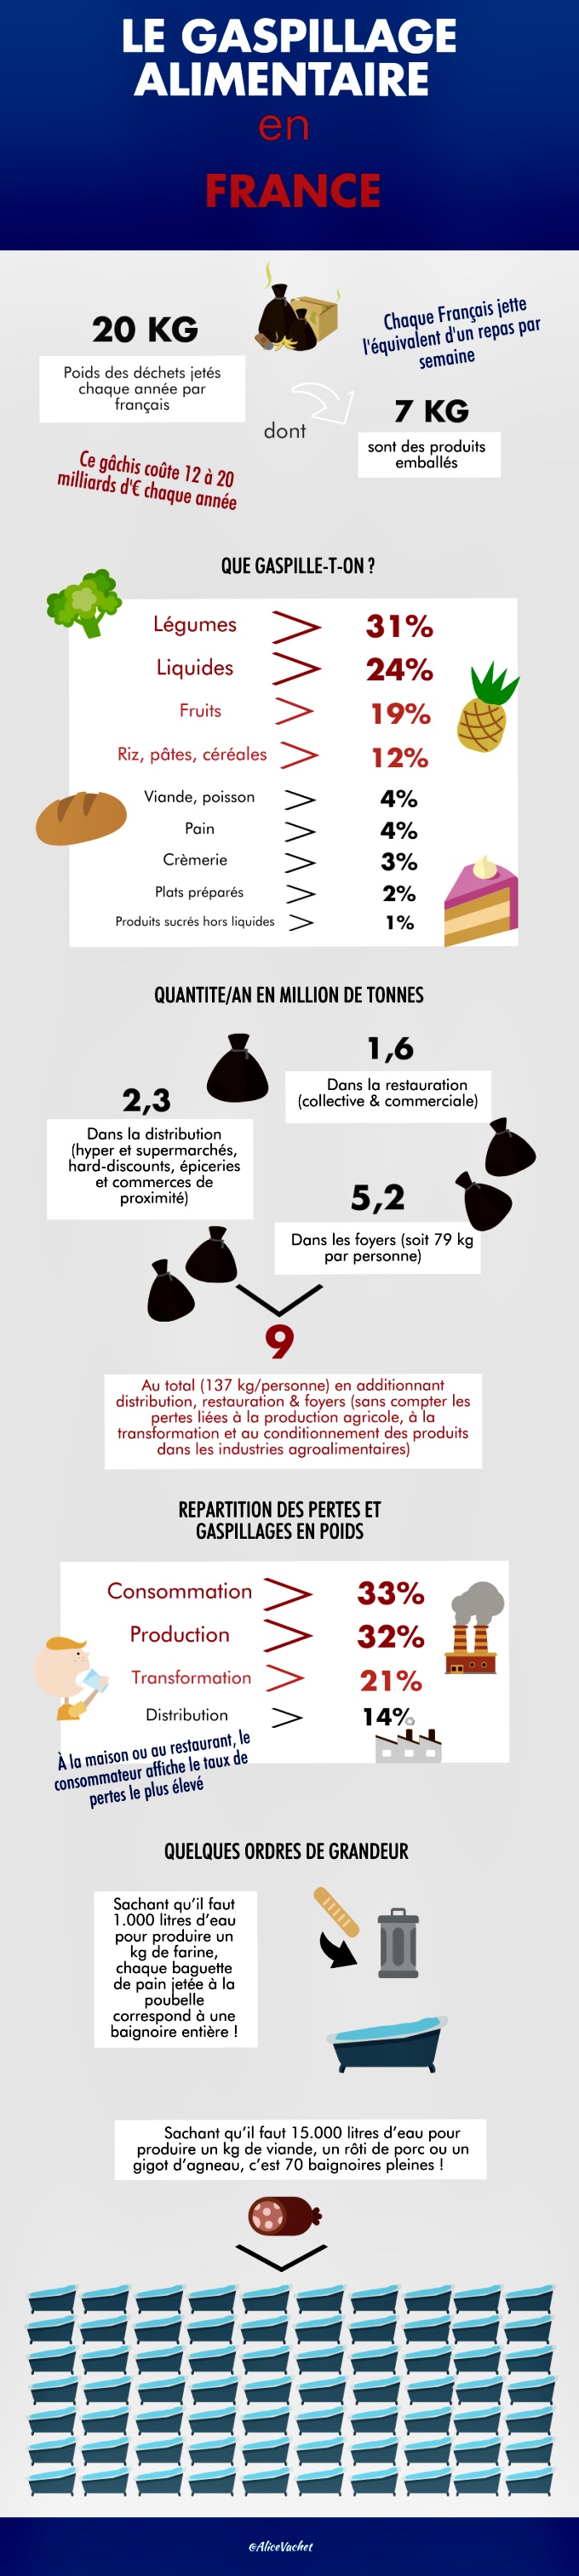 [Infographie] Le gaspillage alimentaire en France